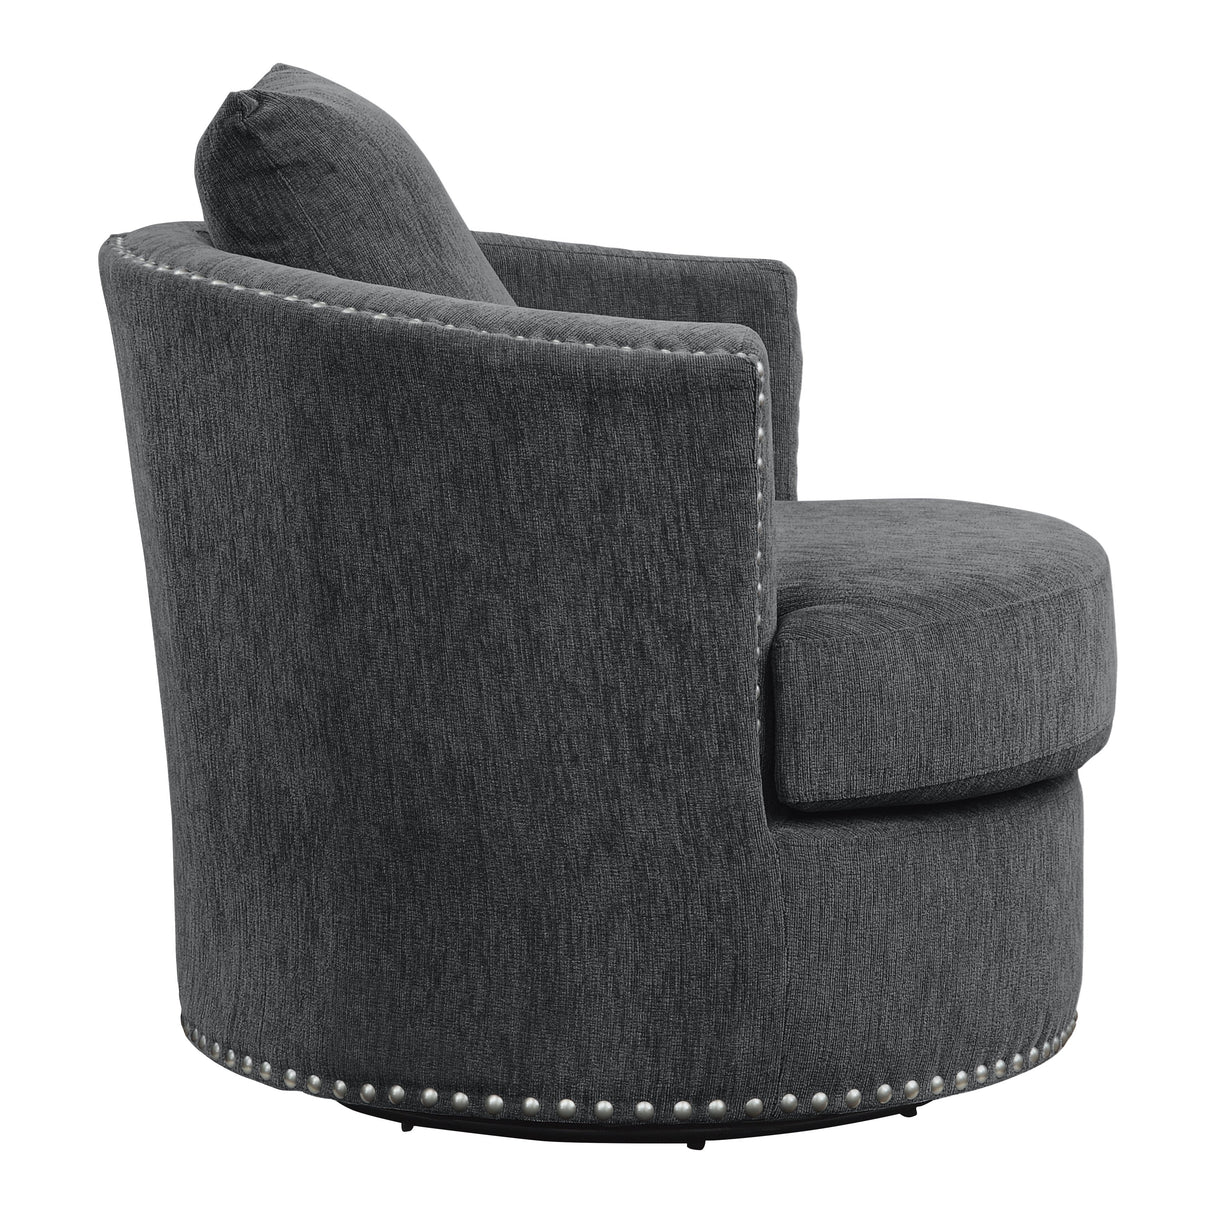 Morelia Charcoal Swivel Chair